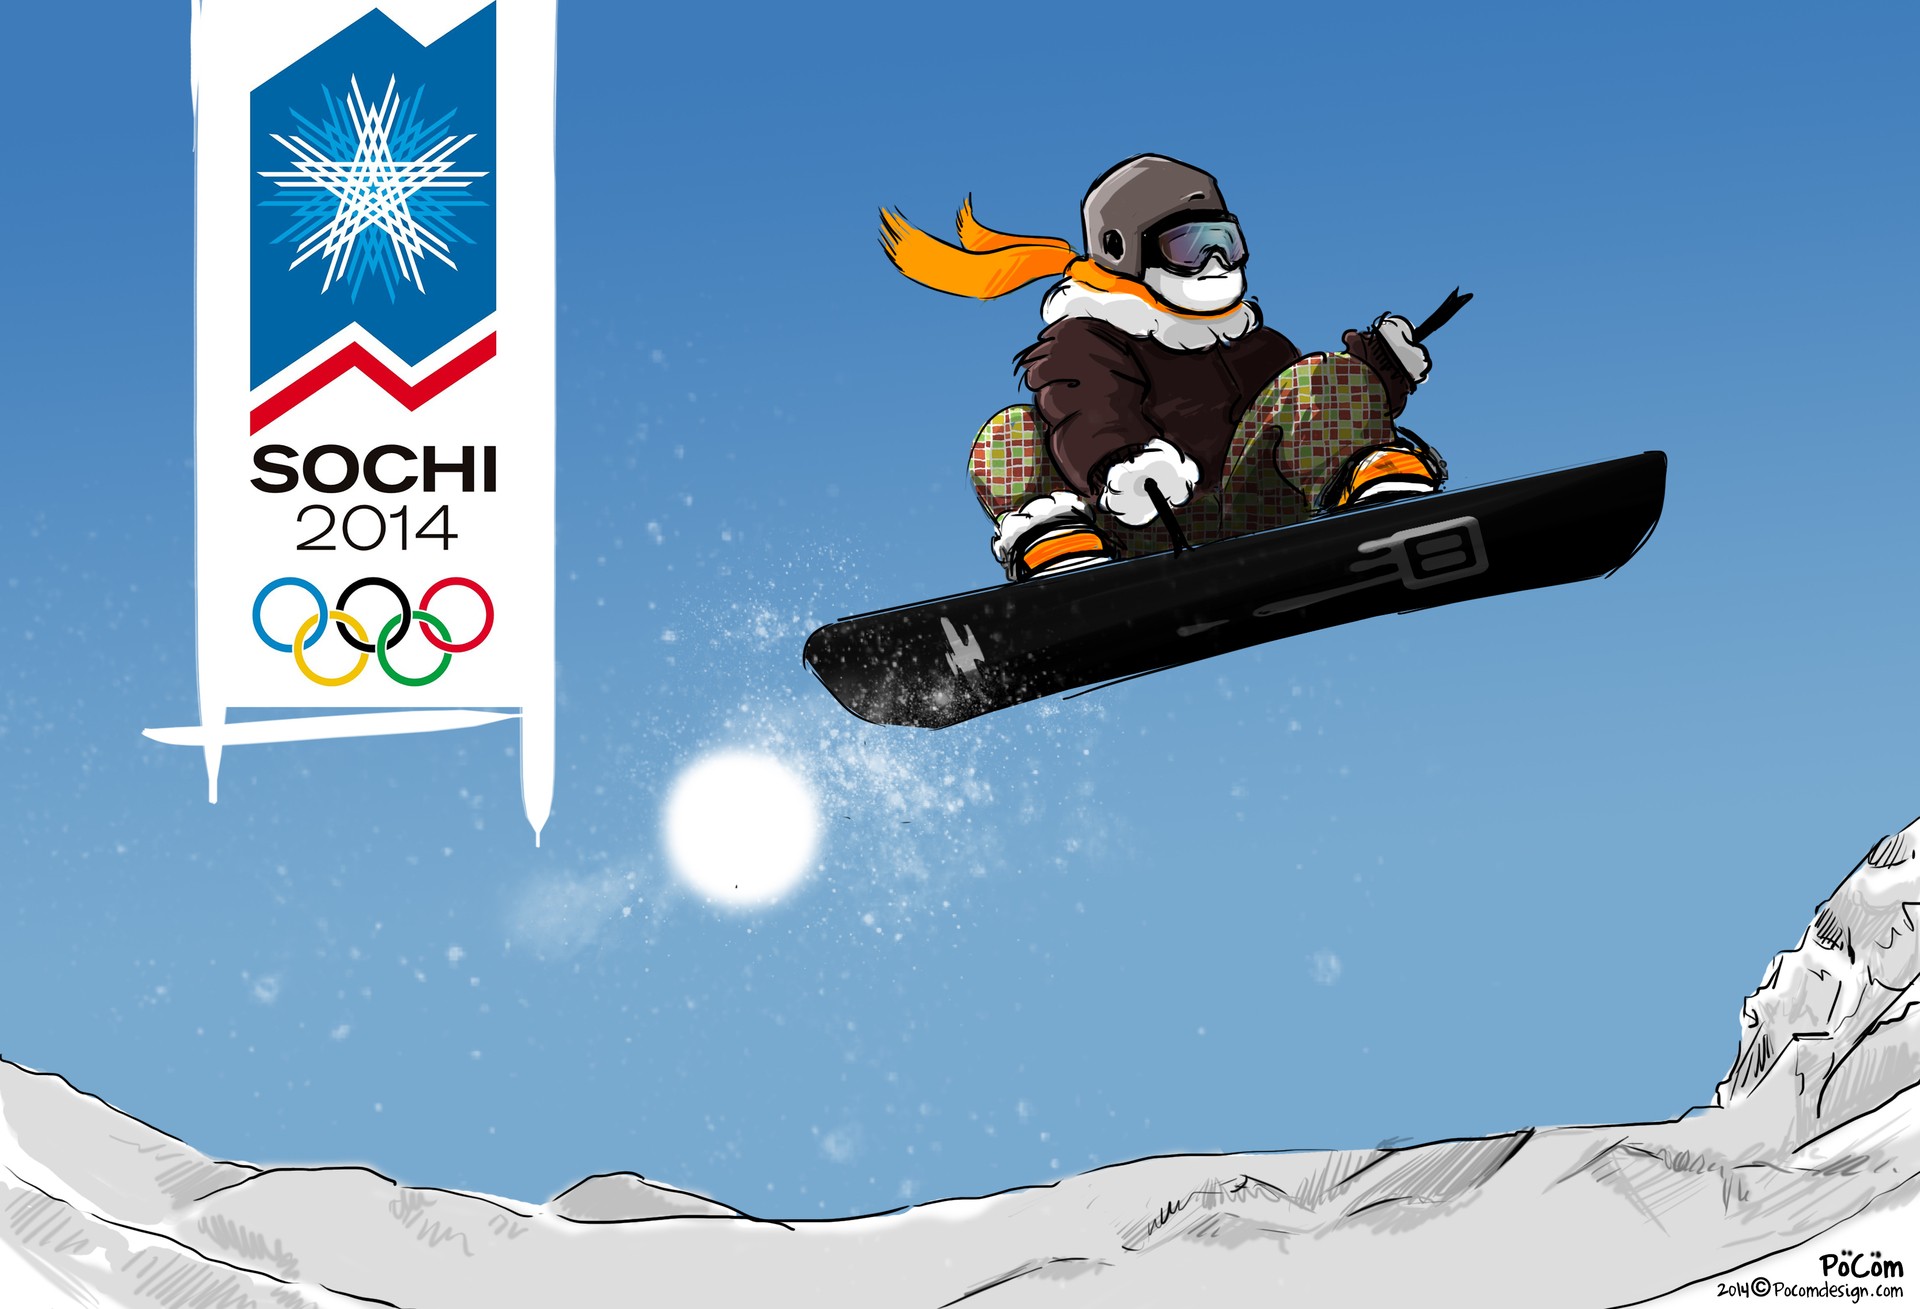 Mout Snowboard - Olympic game SOCHI 2014 par PoCom